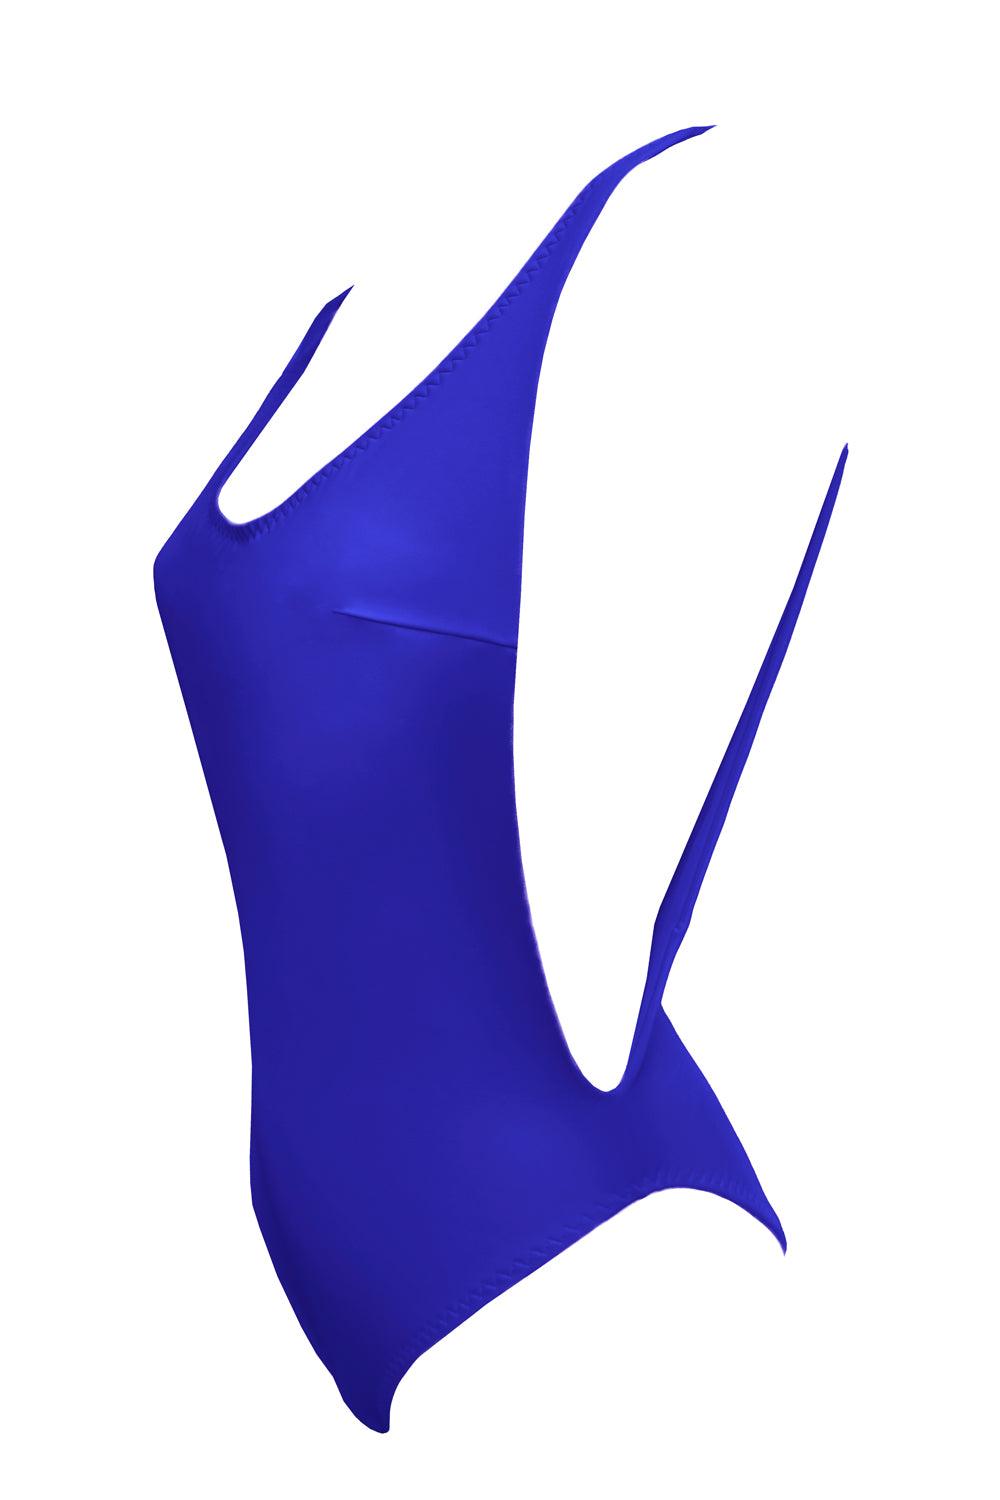 Mediana Electric swimsuit - One Piece swimsuit by yesUndress. Shop on yesUndress